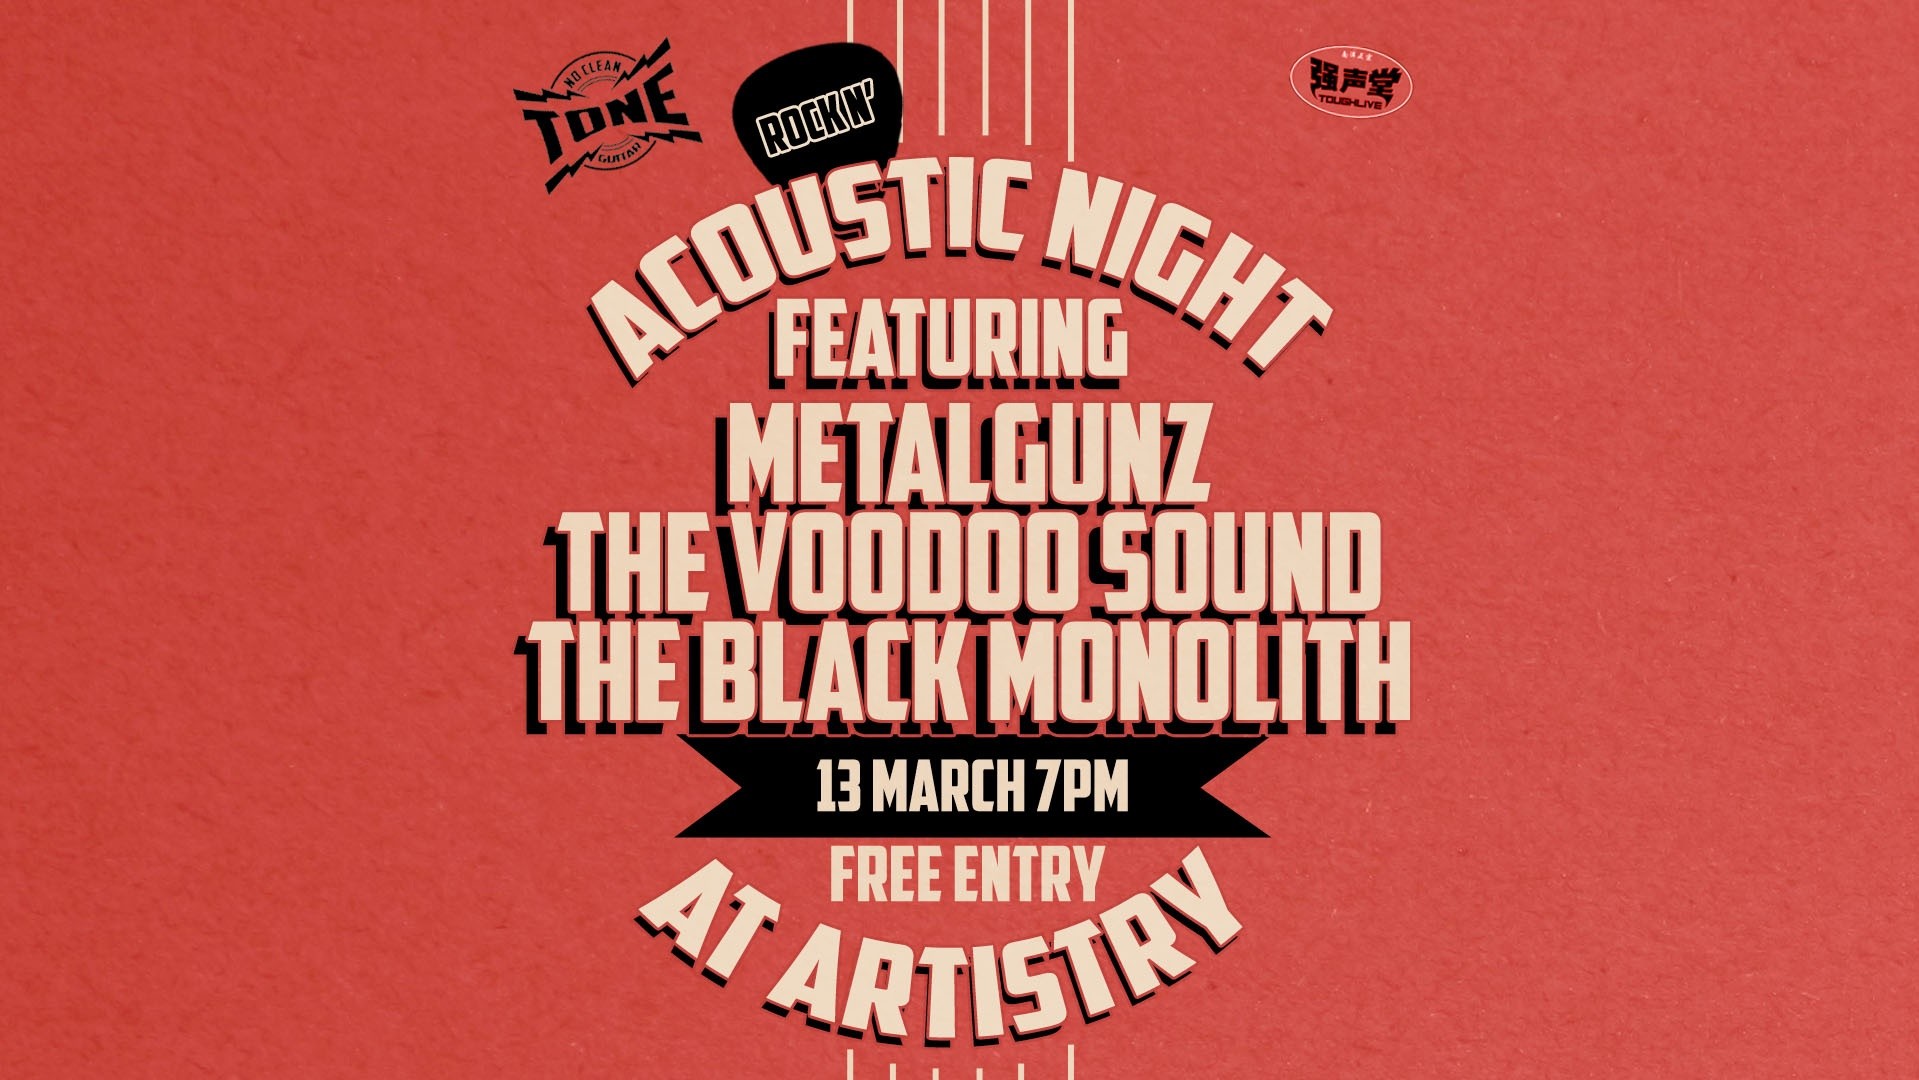 Rock n' Acoustic Night at Artistry